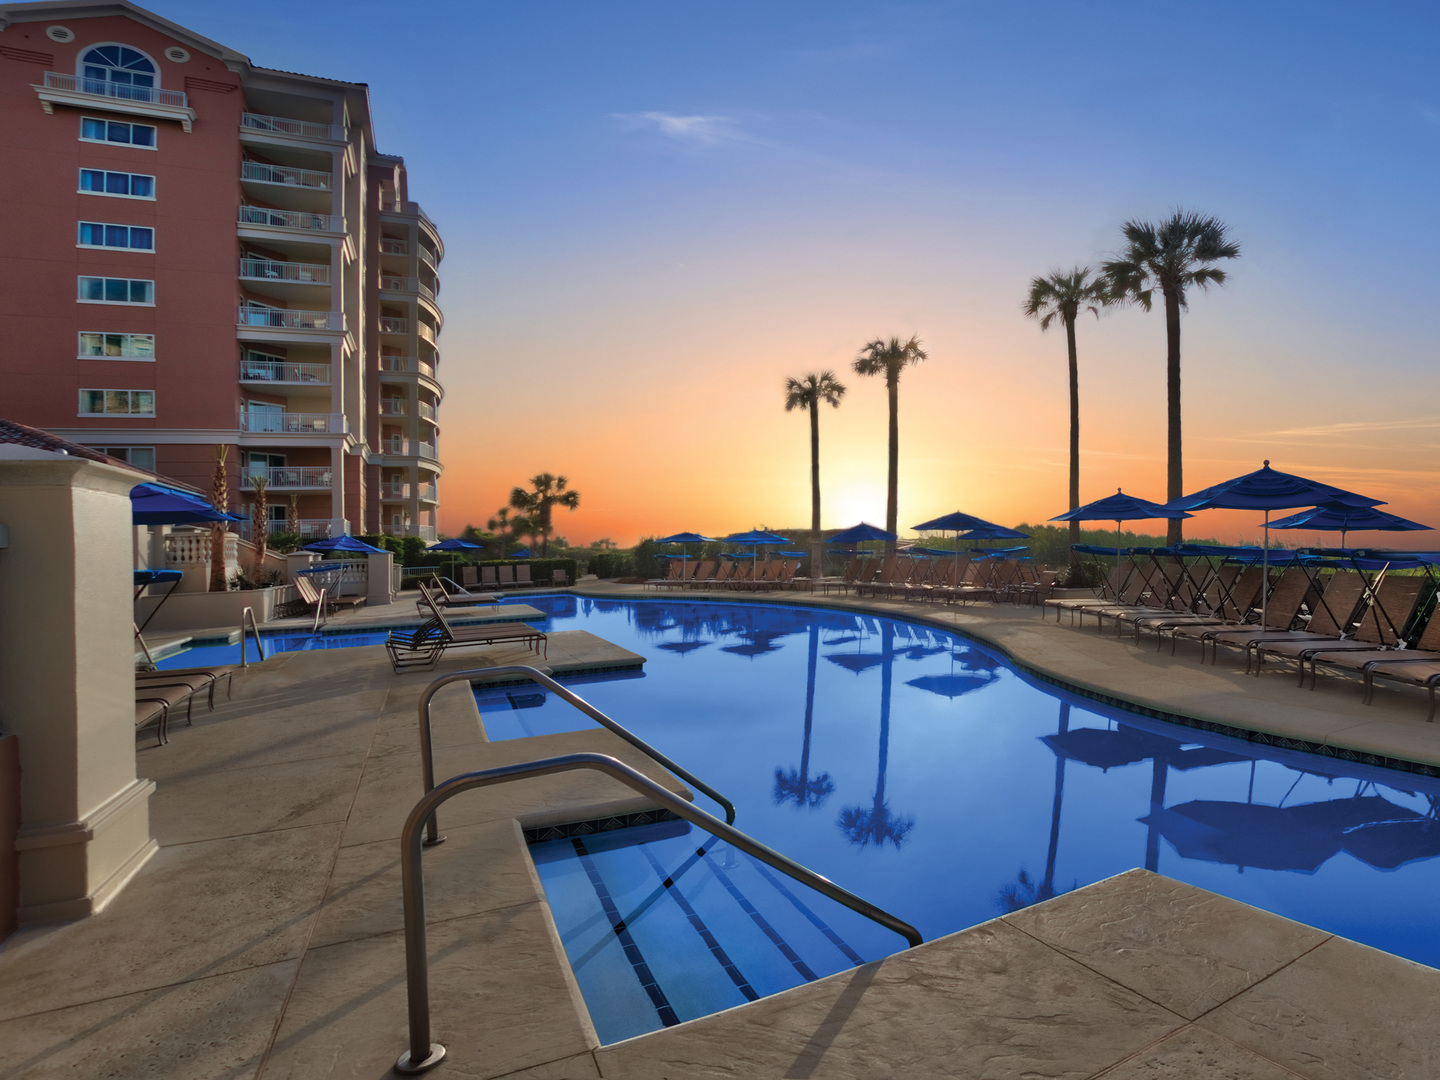 Marriott's OceanWatch Seaside Pool. Marriott's OceanWatch is located in Myrtle Beach, South Carolina United States.